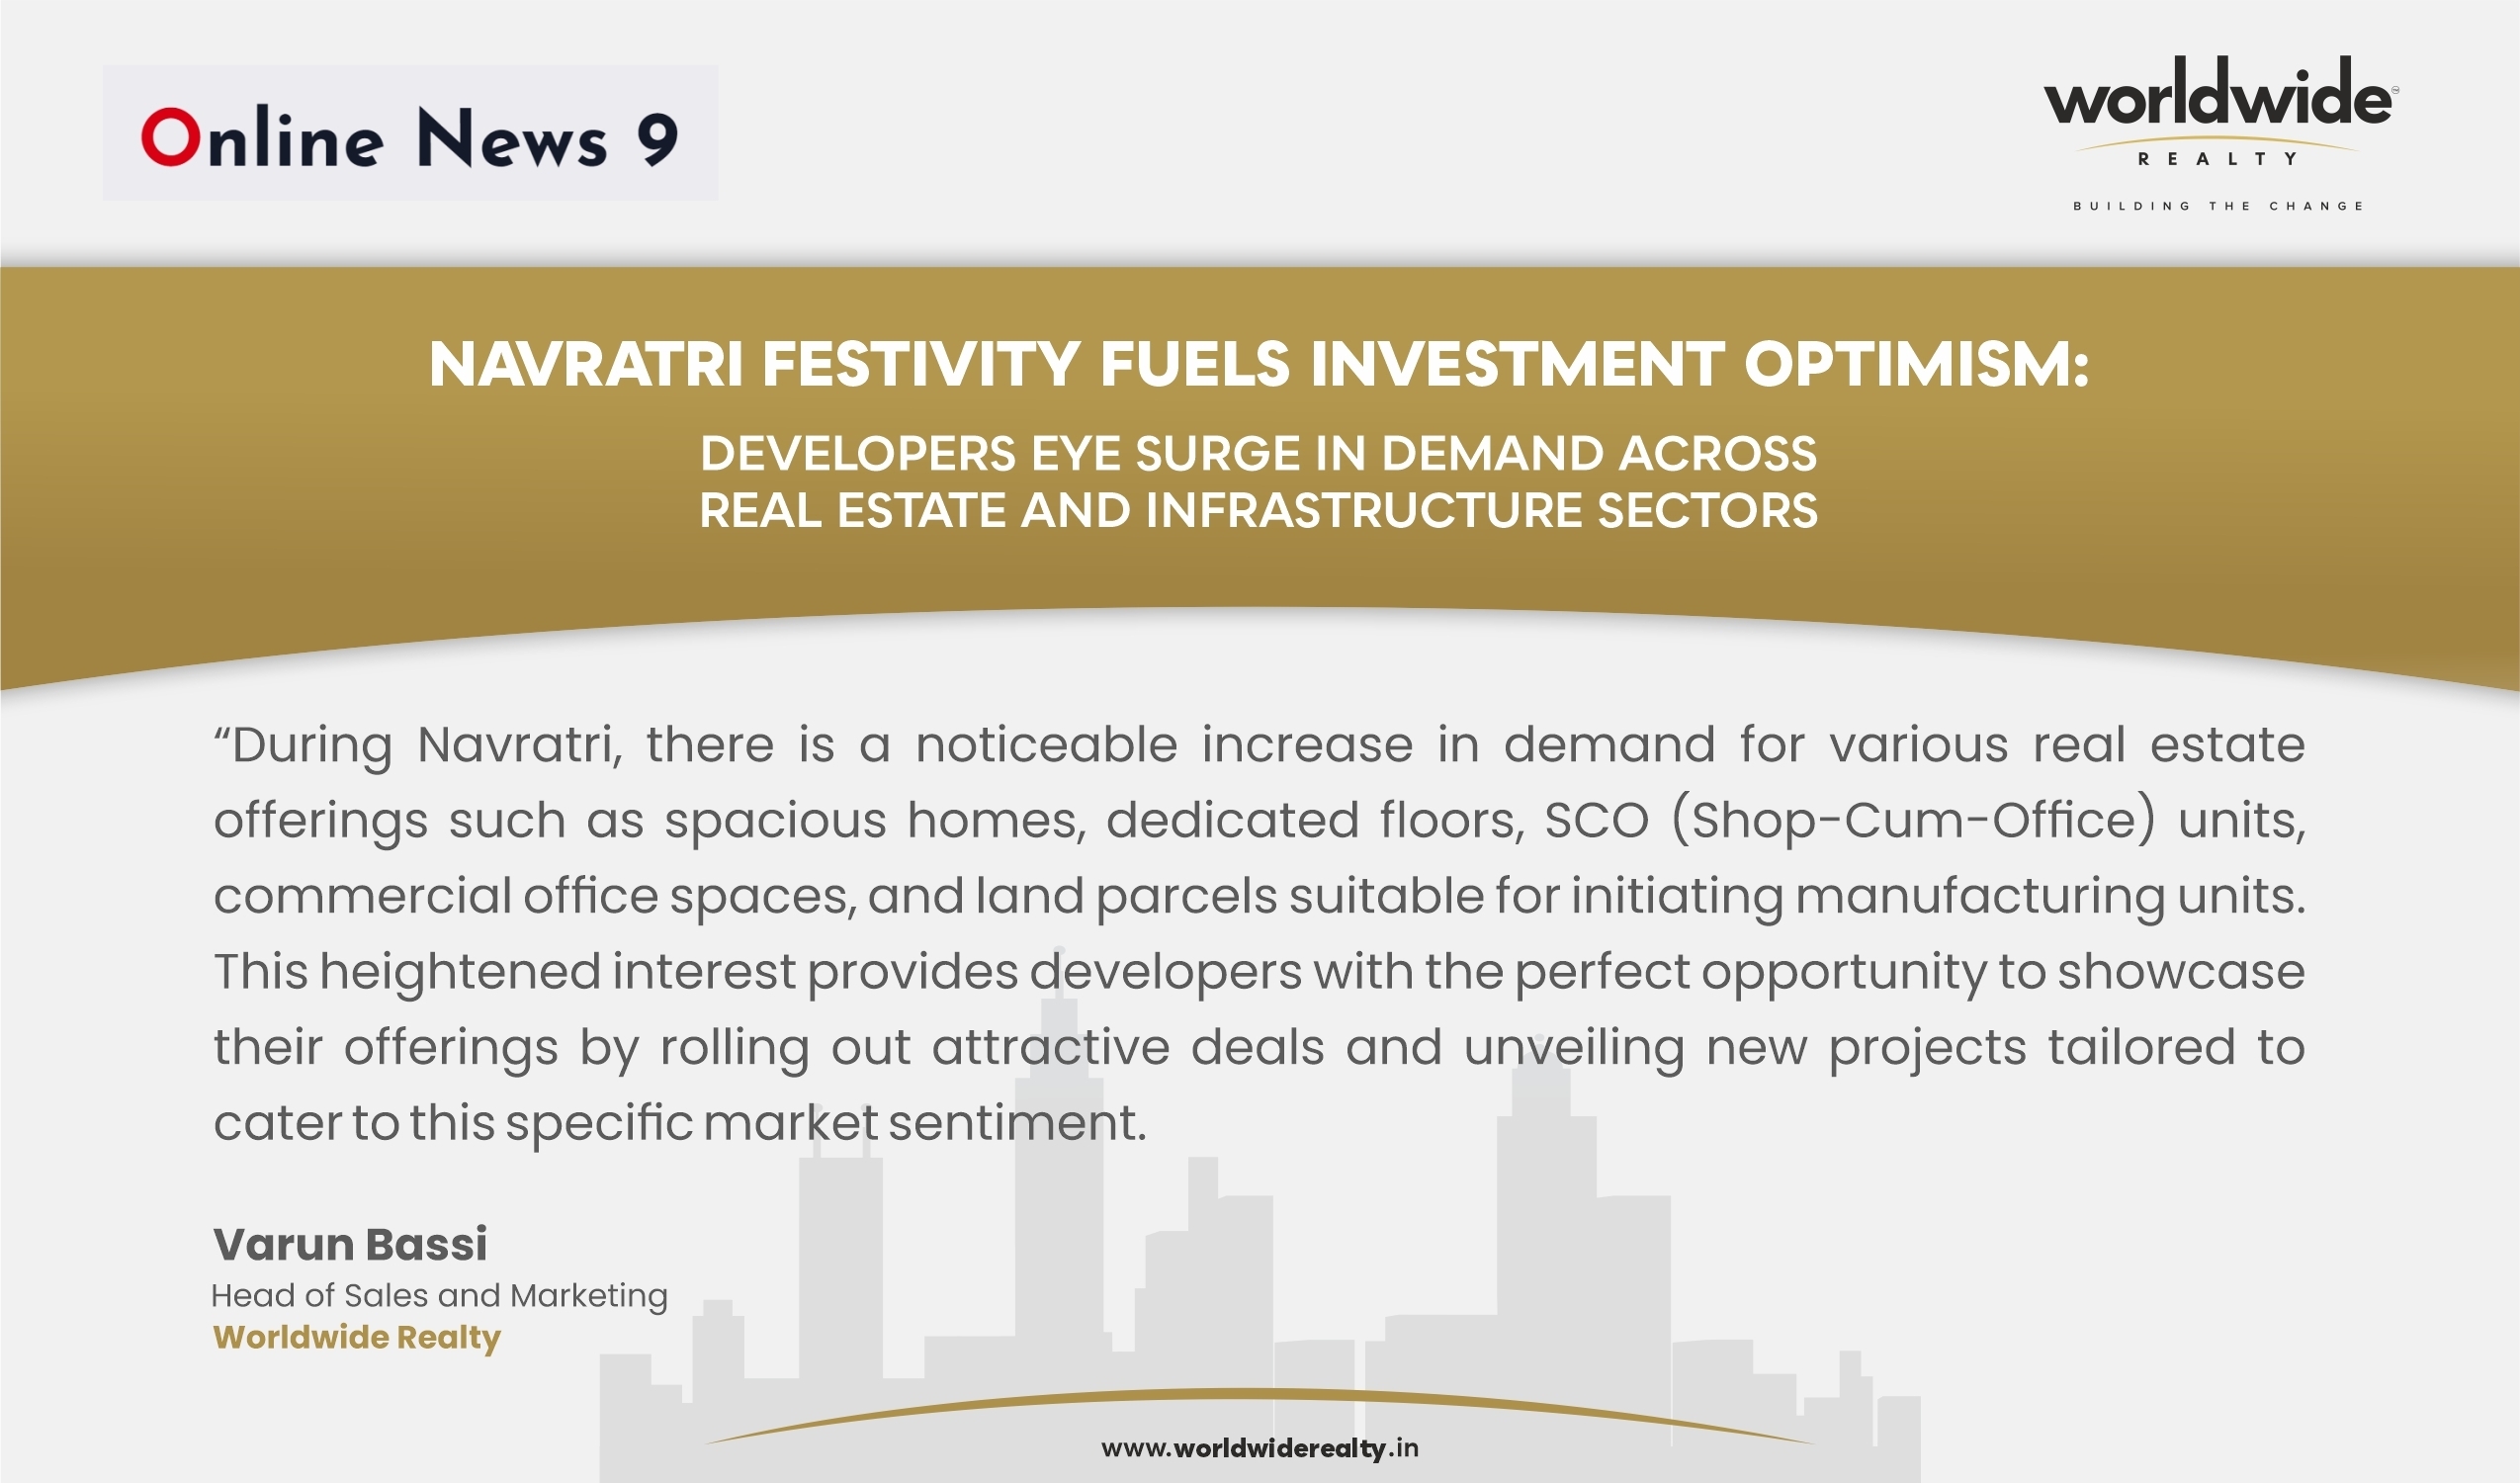 Navratri Festivity Fuels Investment Optimism